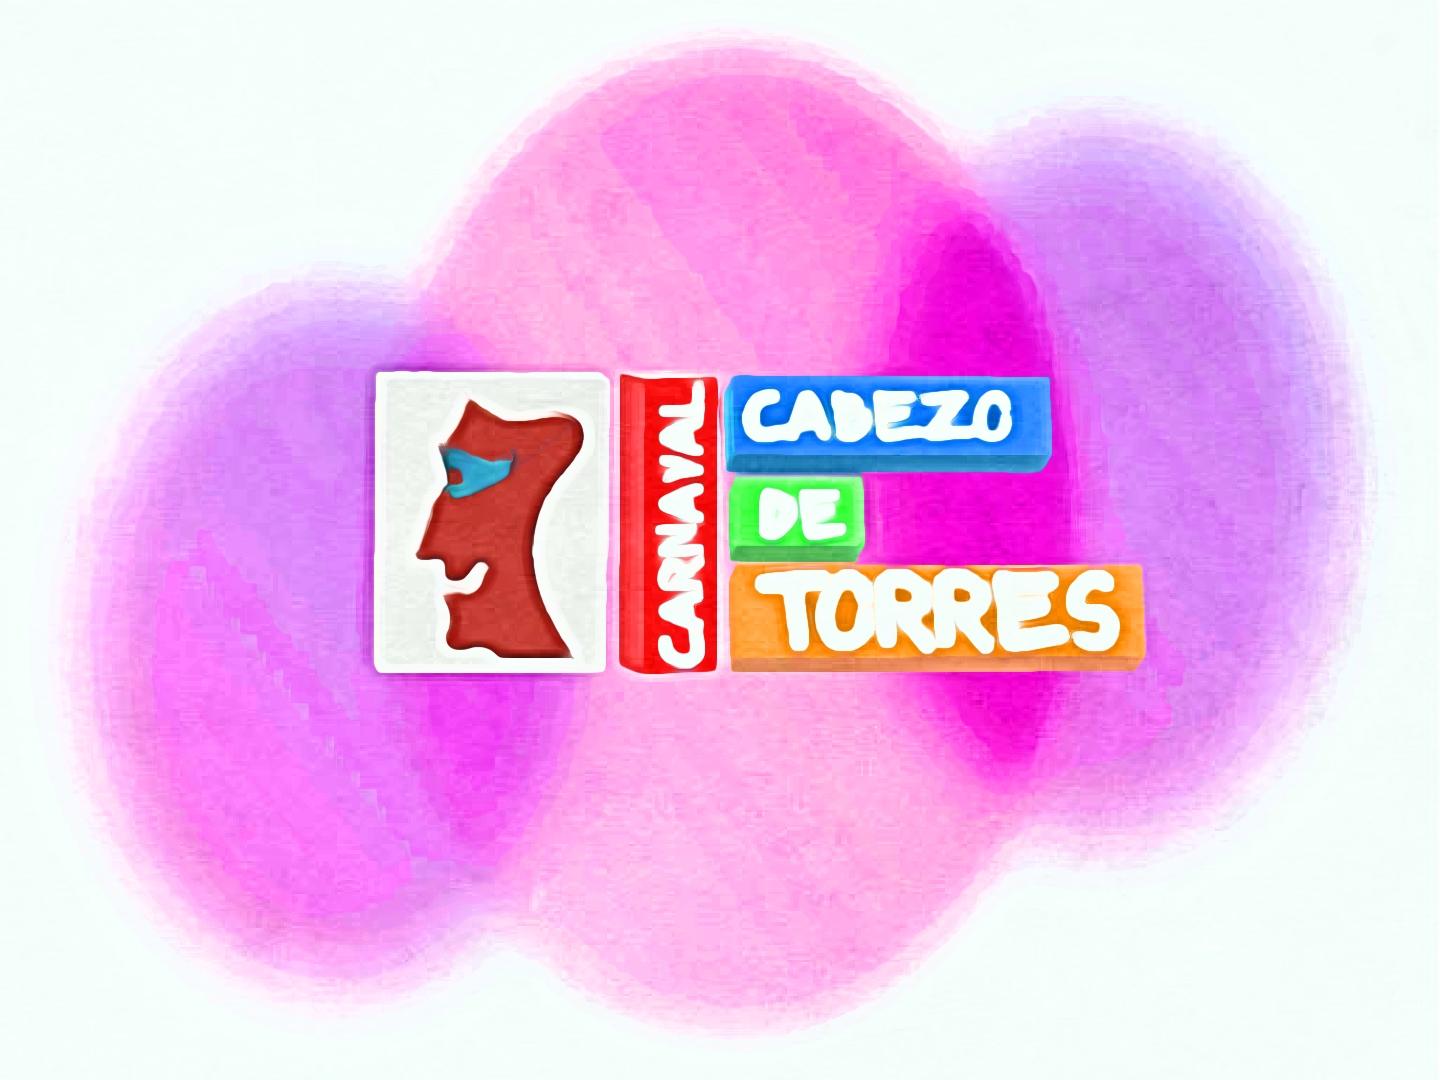 Grupos Carnaval Cabezo de Torres